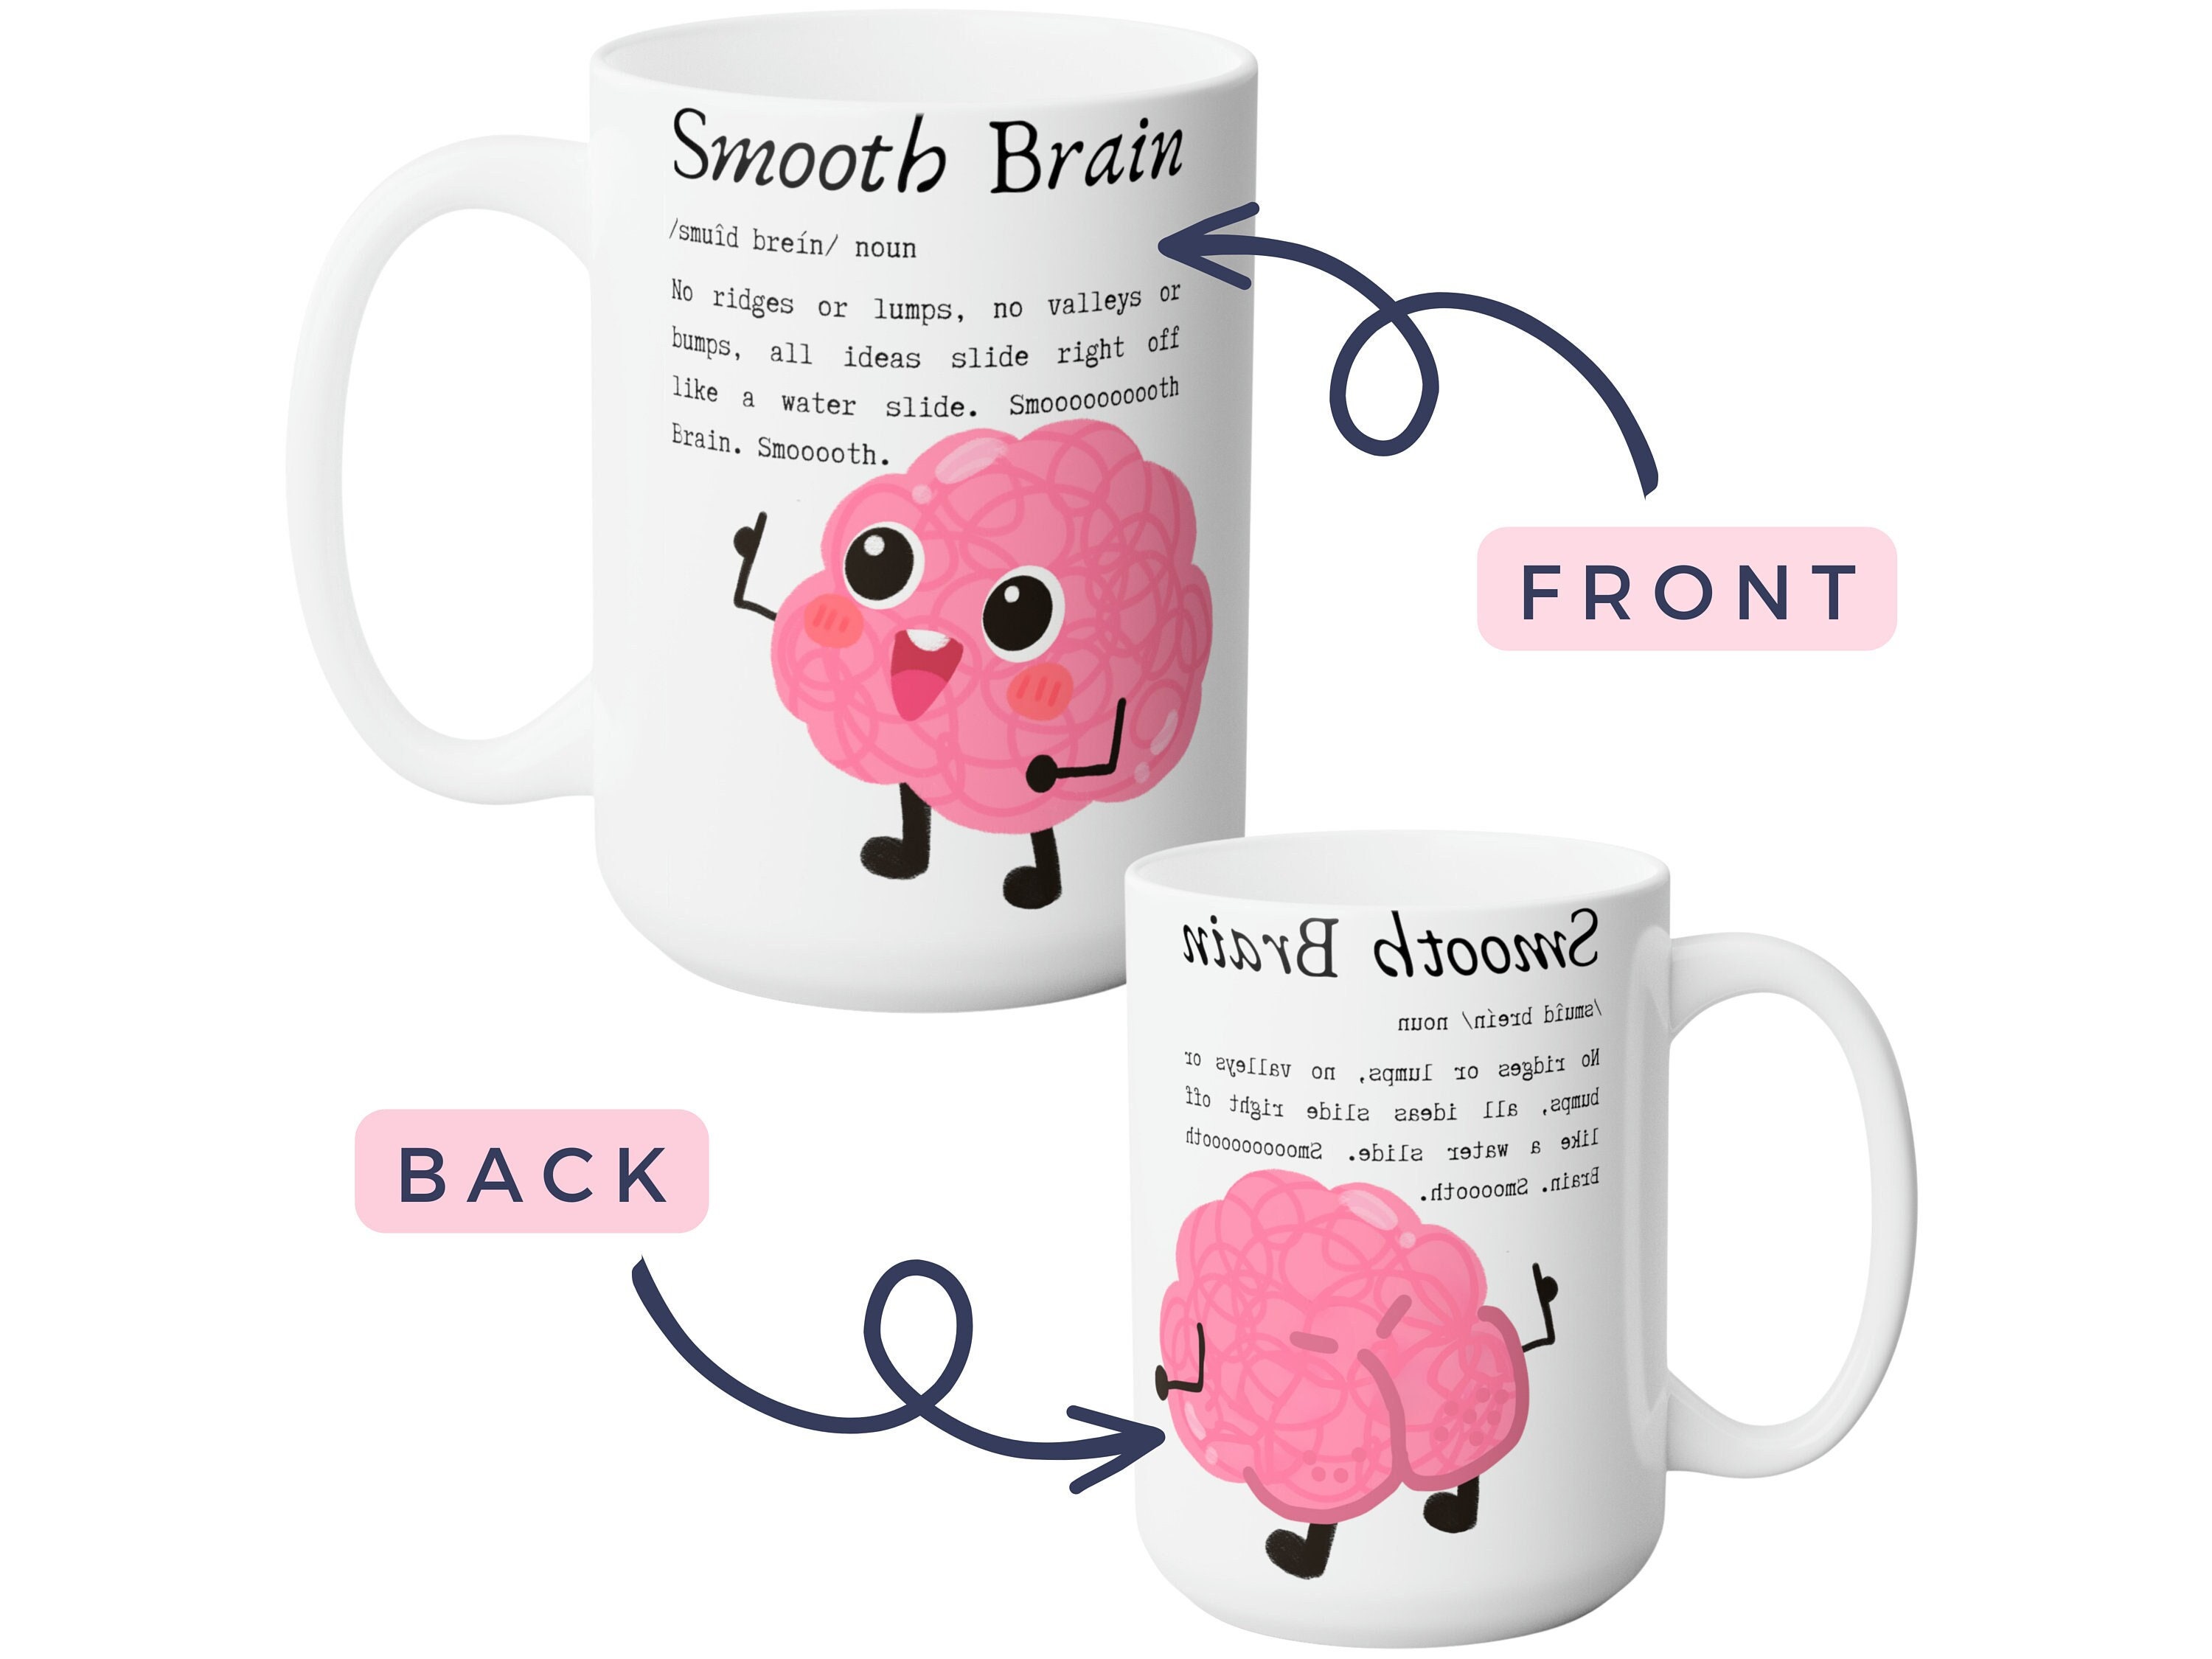 Coffee makes my brain go Weee!! coffee mug - The Artsy Spot